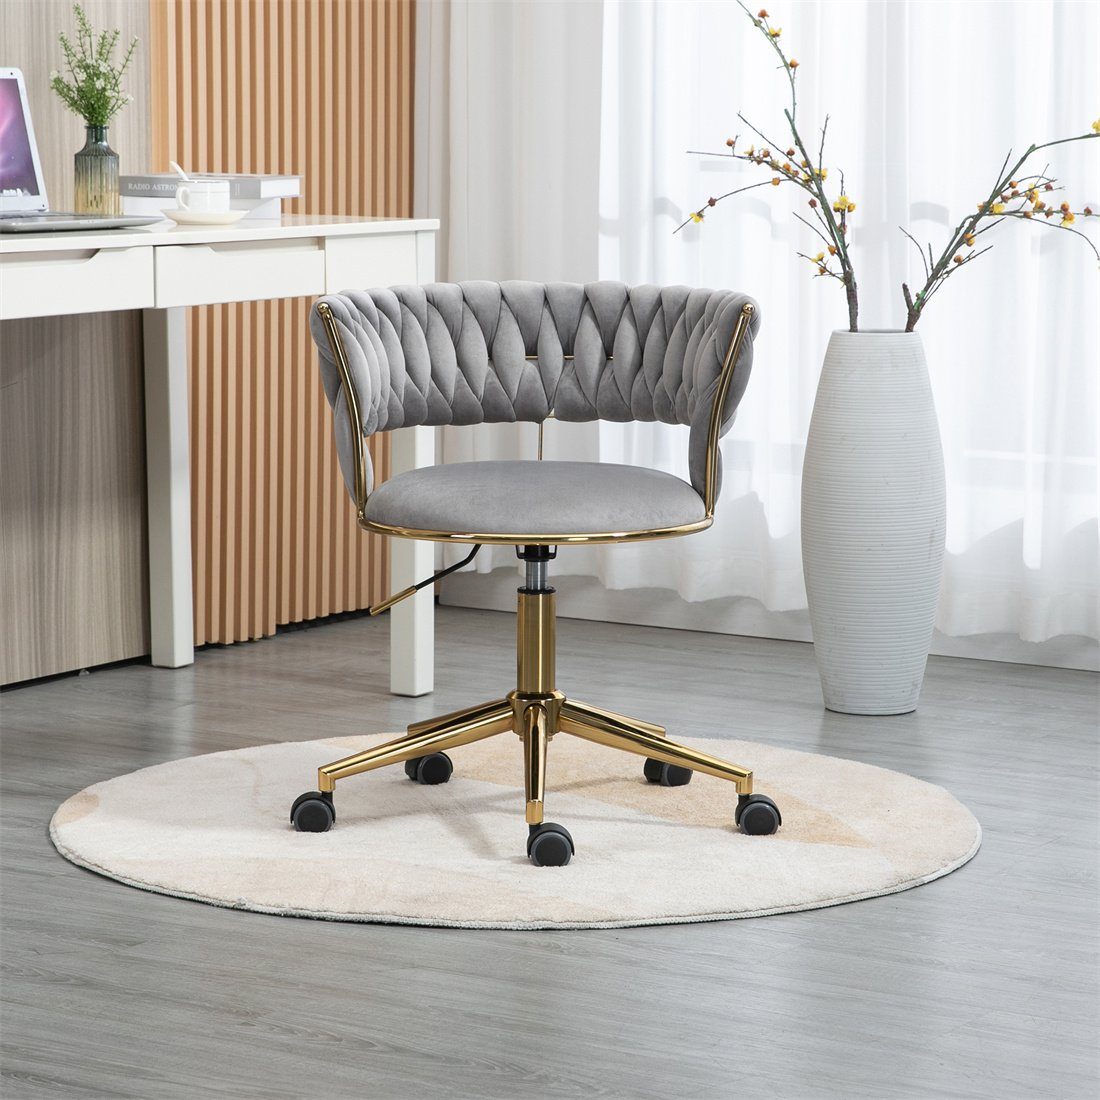 DÖRÖY Drehstuhl Home Office Chair,Kosmetikstuhl,Verstellbarer Computerstuhl,Grau